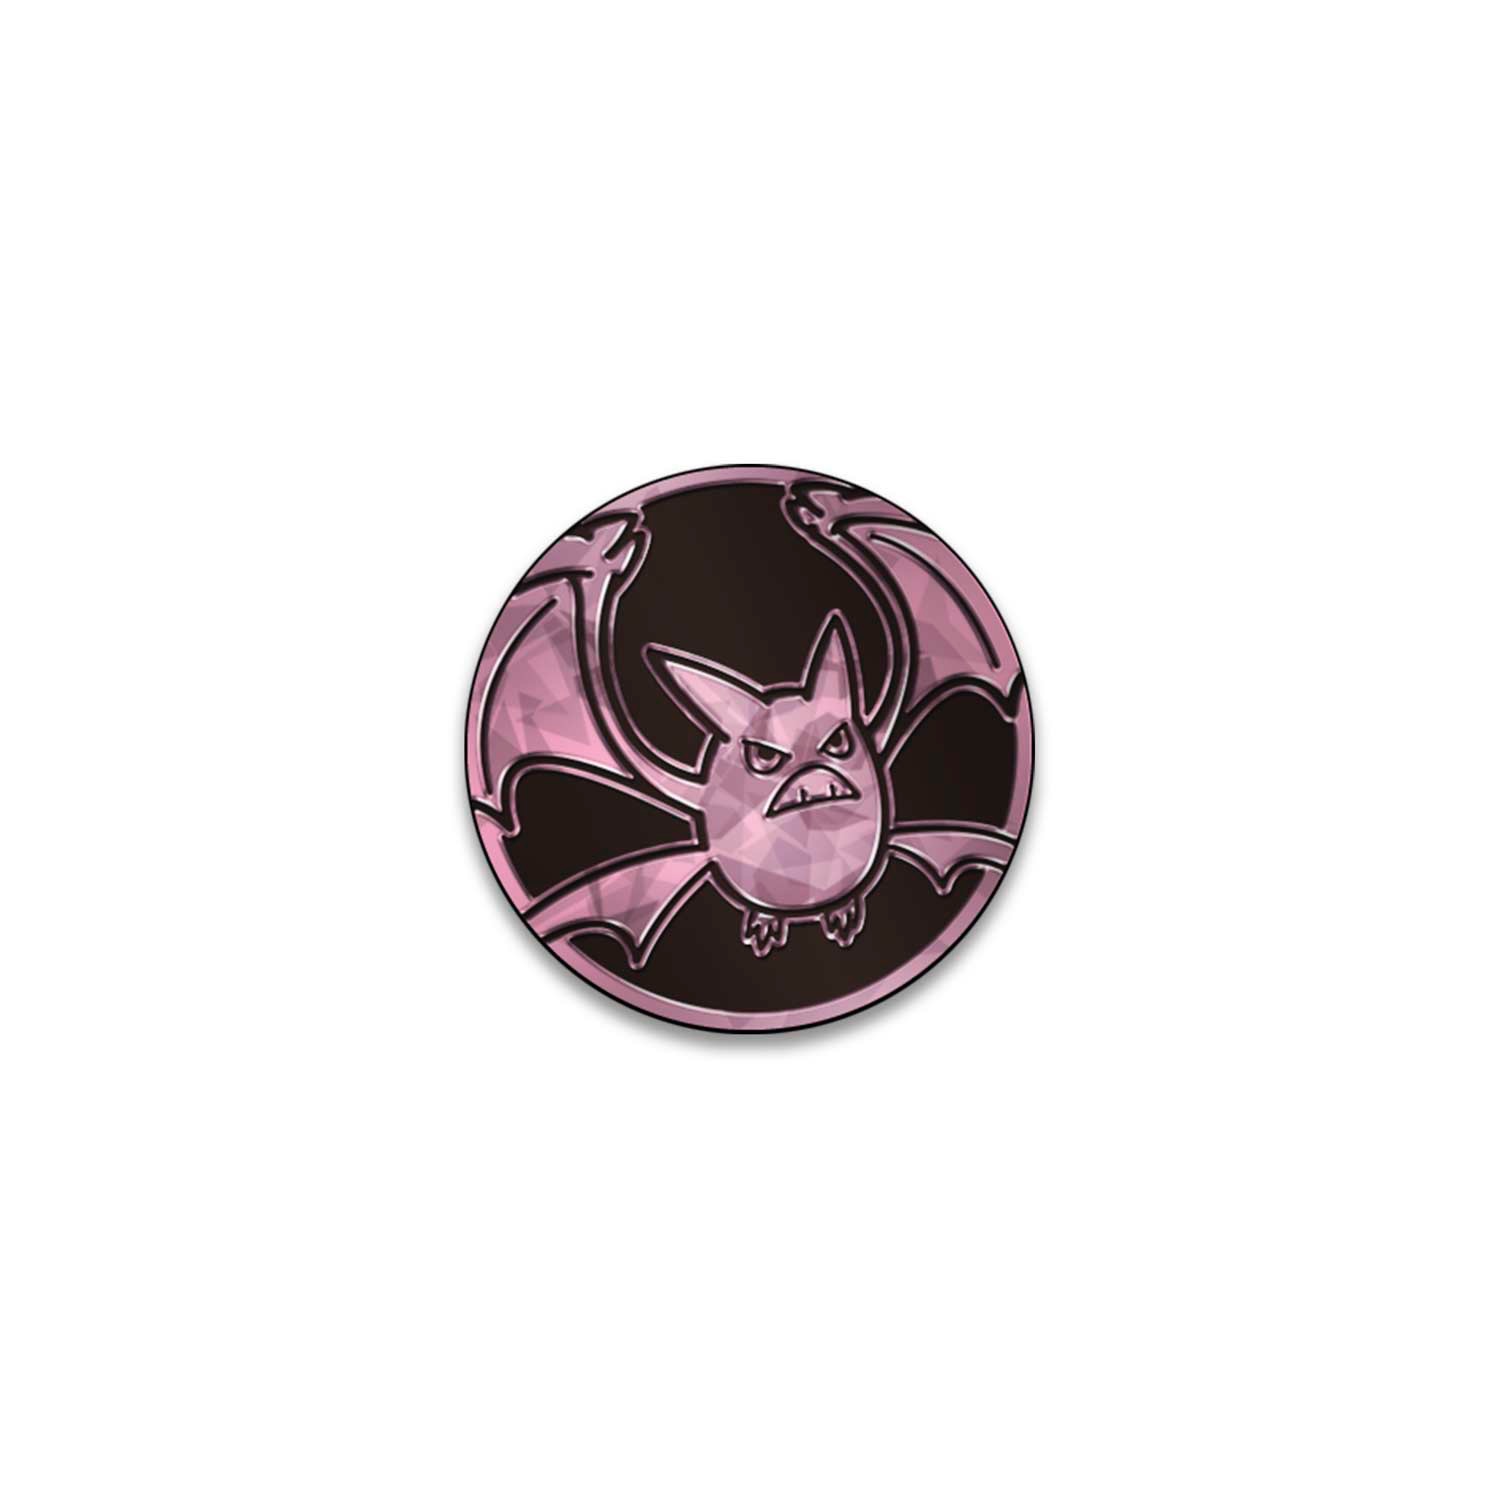 Pokémon TCG: Shining Fates Premium Collection (Shiny Crobat VMAX)